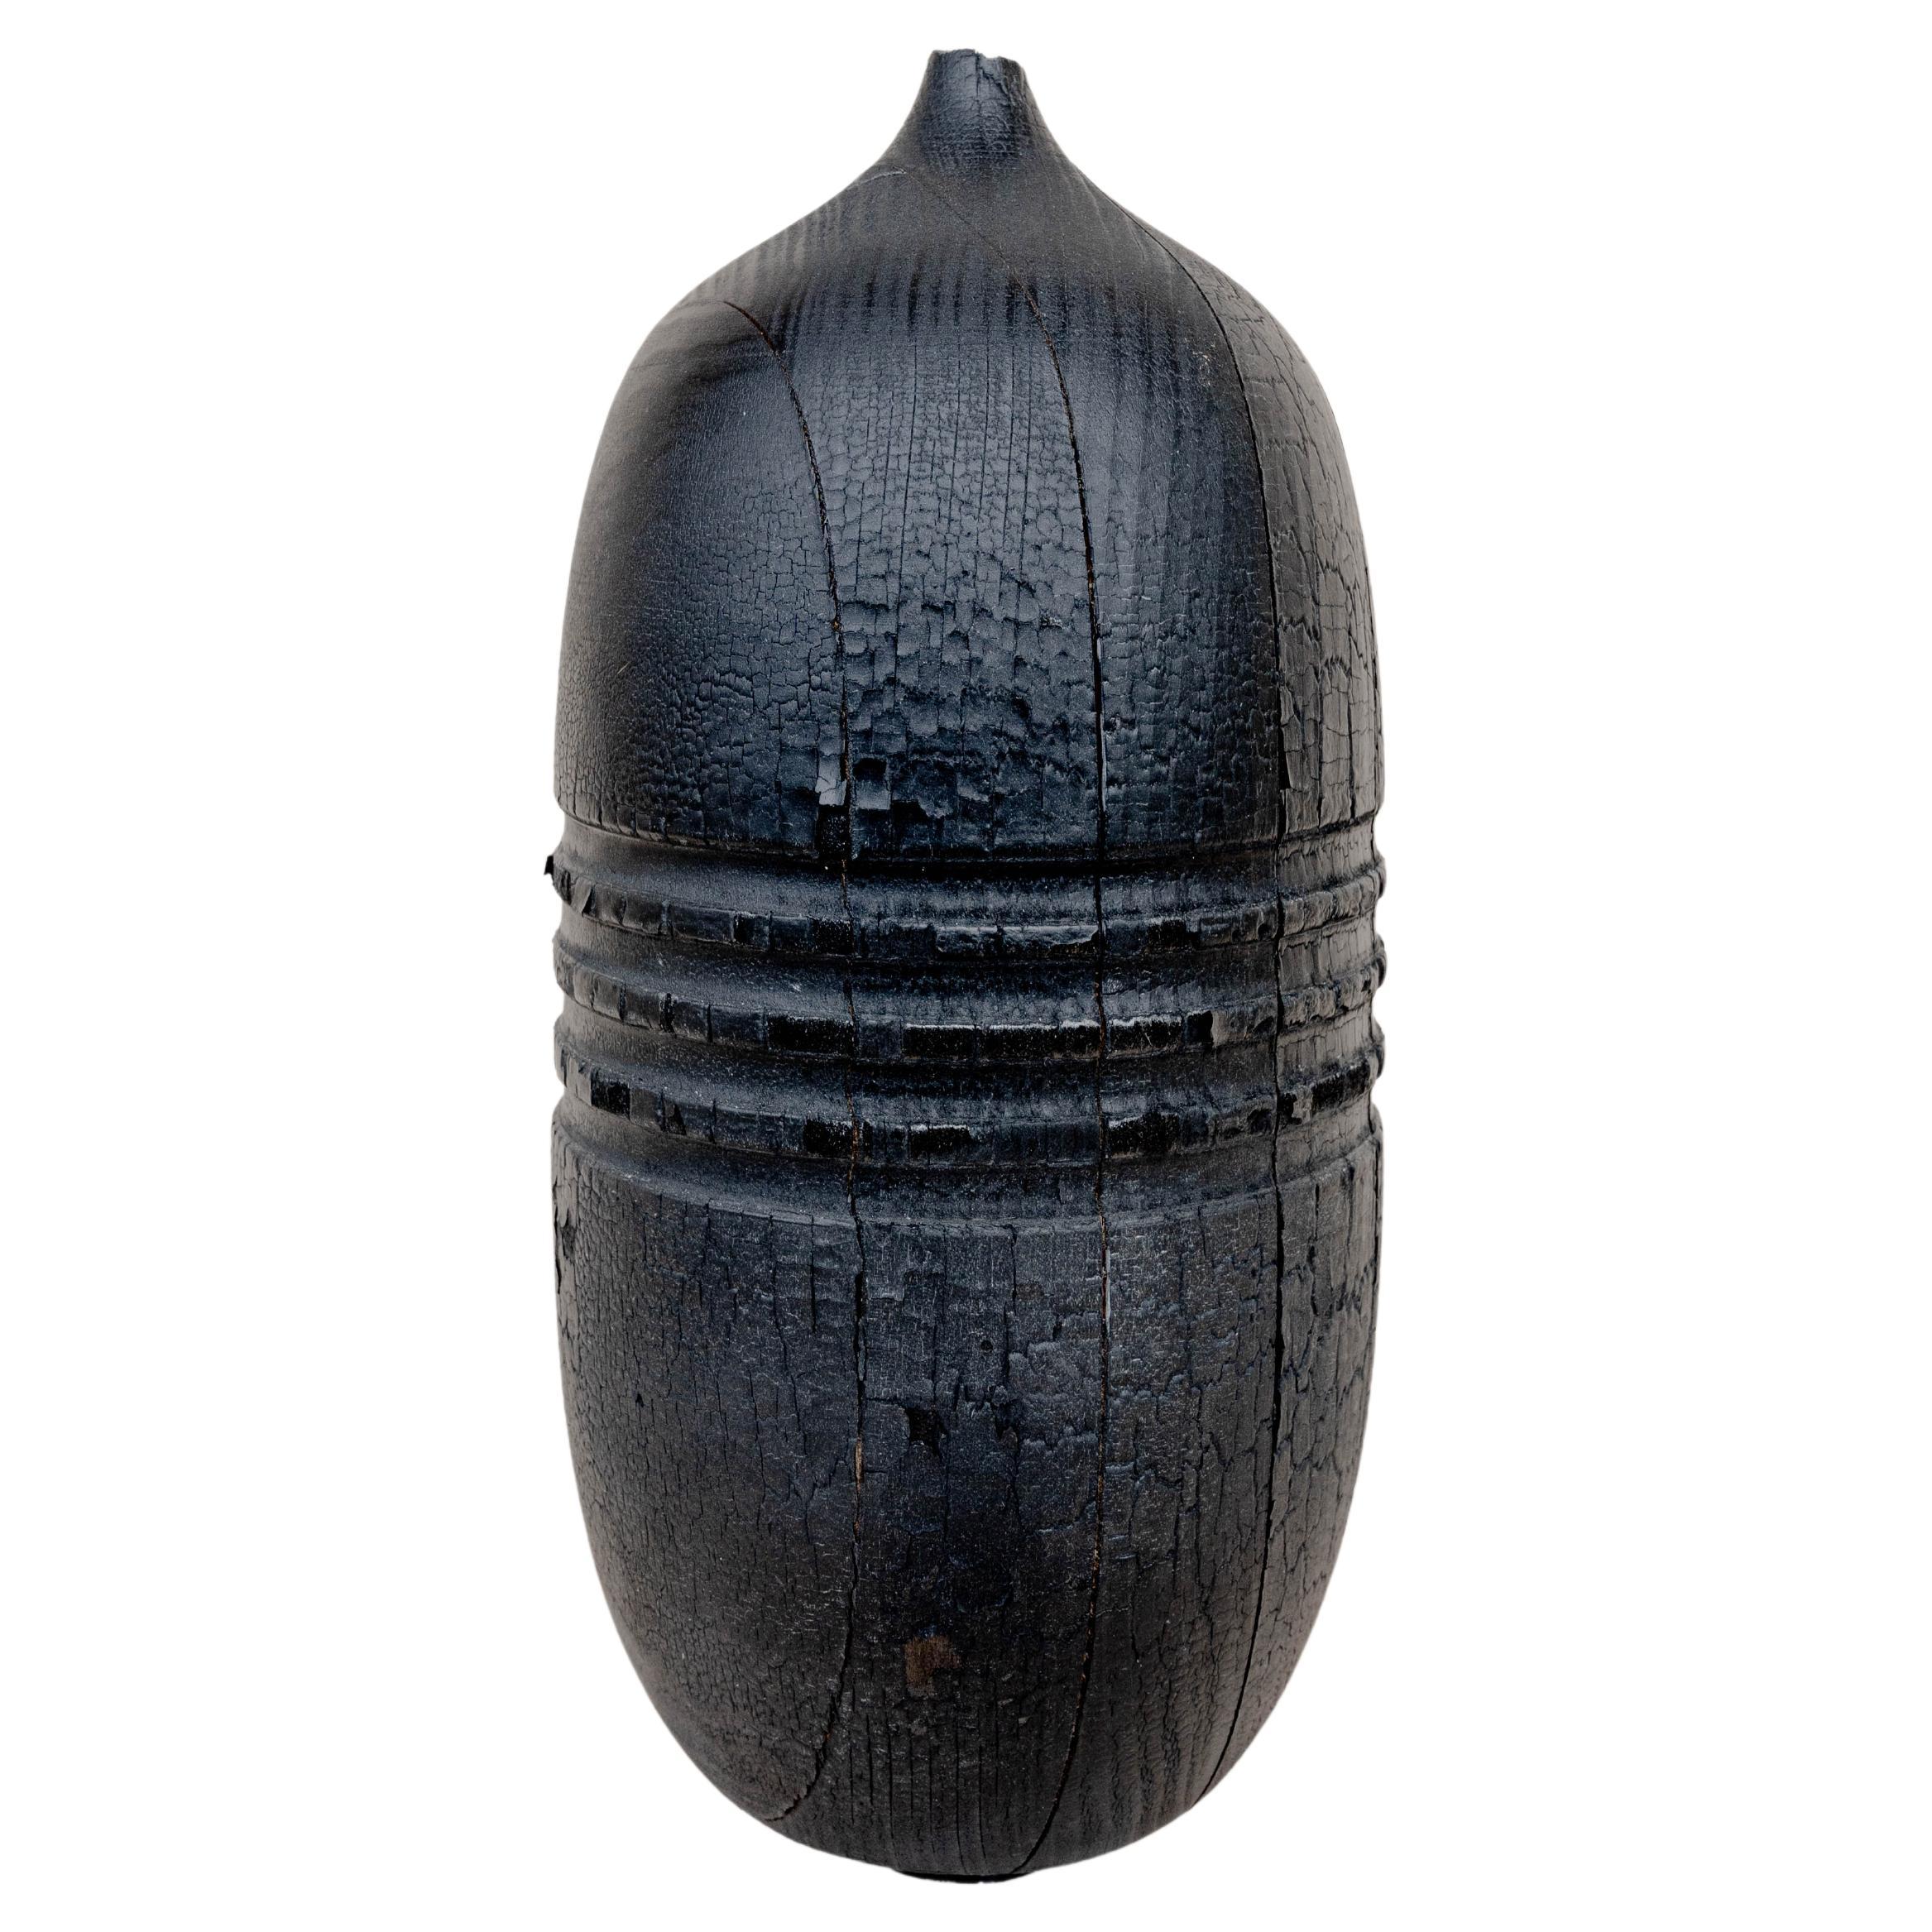 Burnt Vase XL #2 by Daniel Elkayam